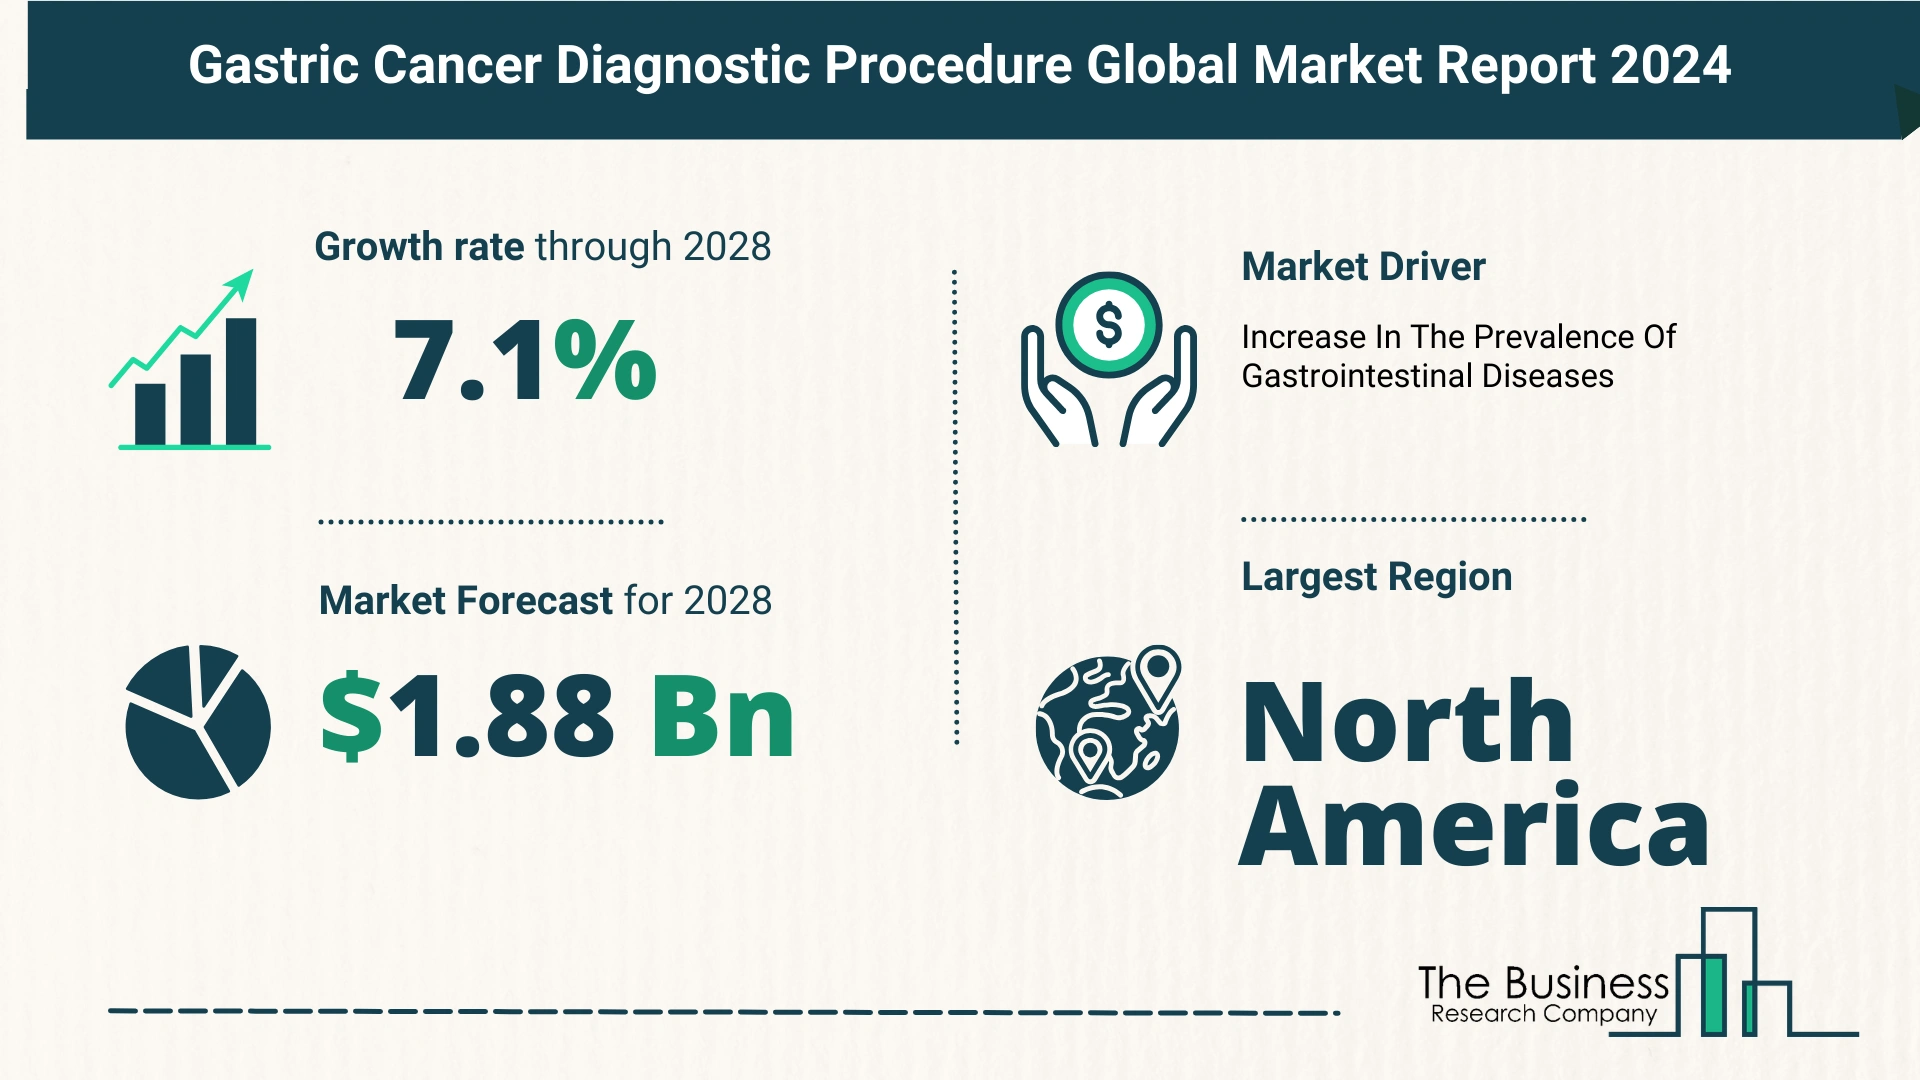 Global Gastric Cancer Diagnostic Procedure Market Report